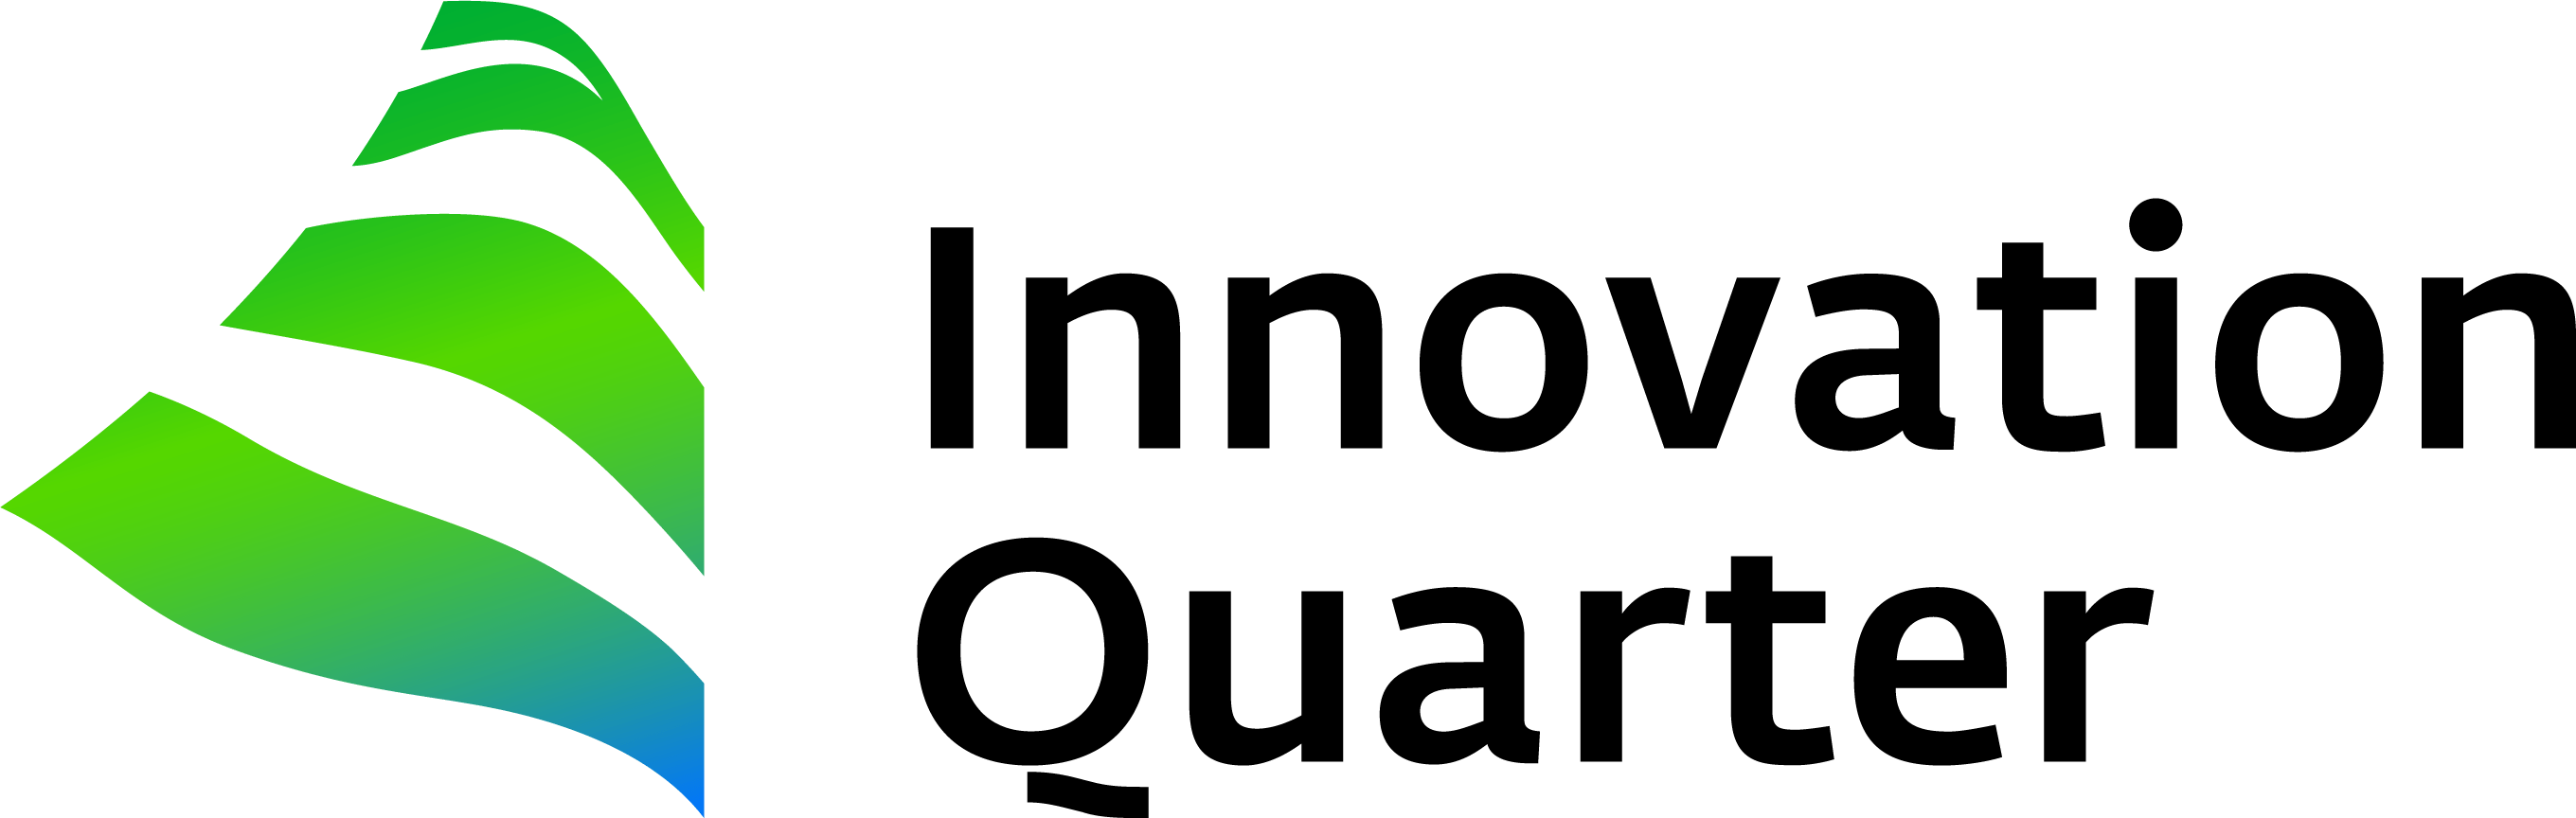 InnovationQuarter logo